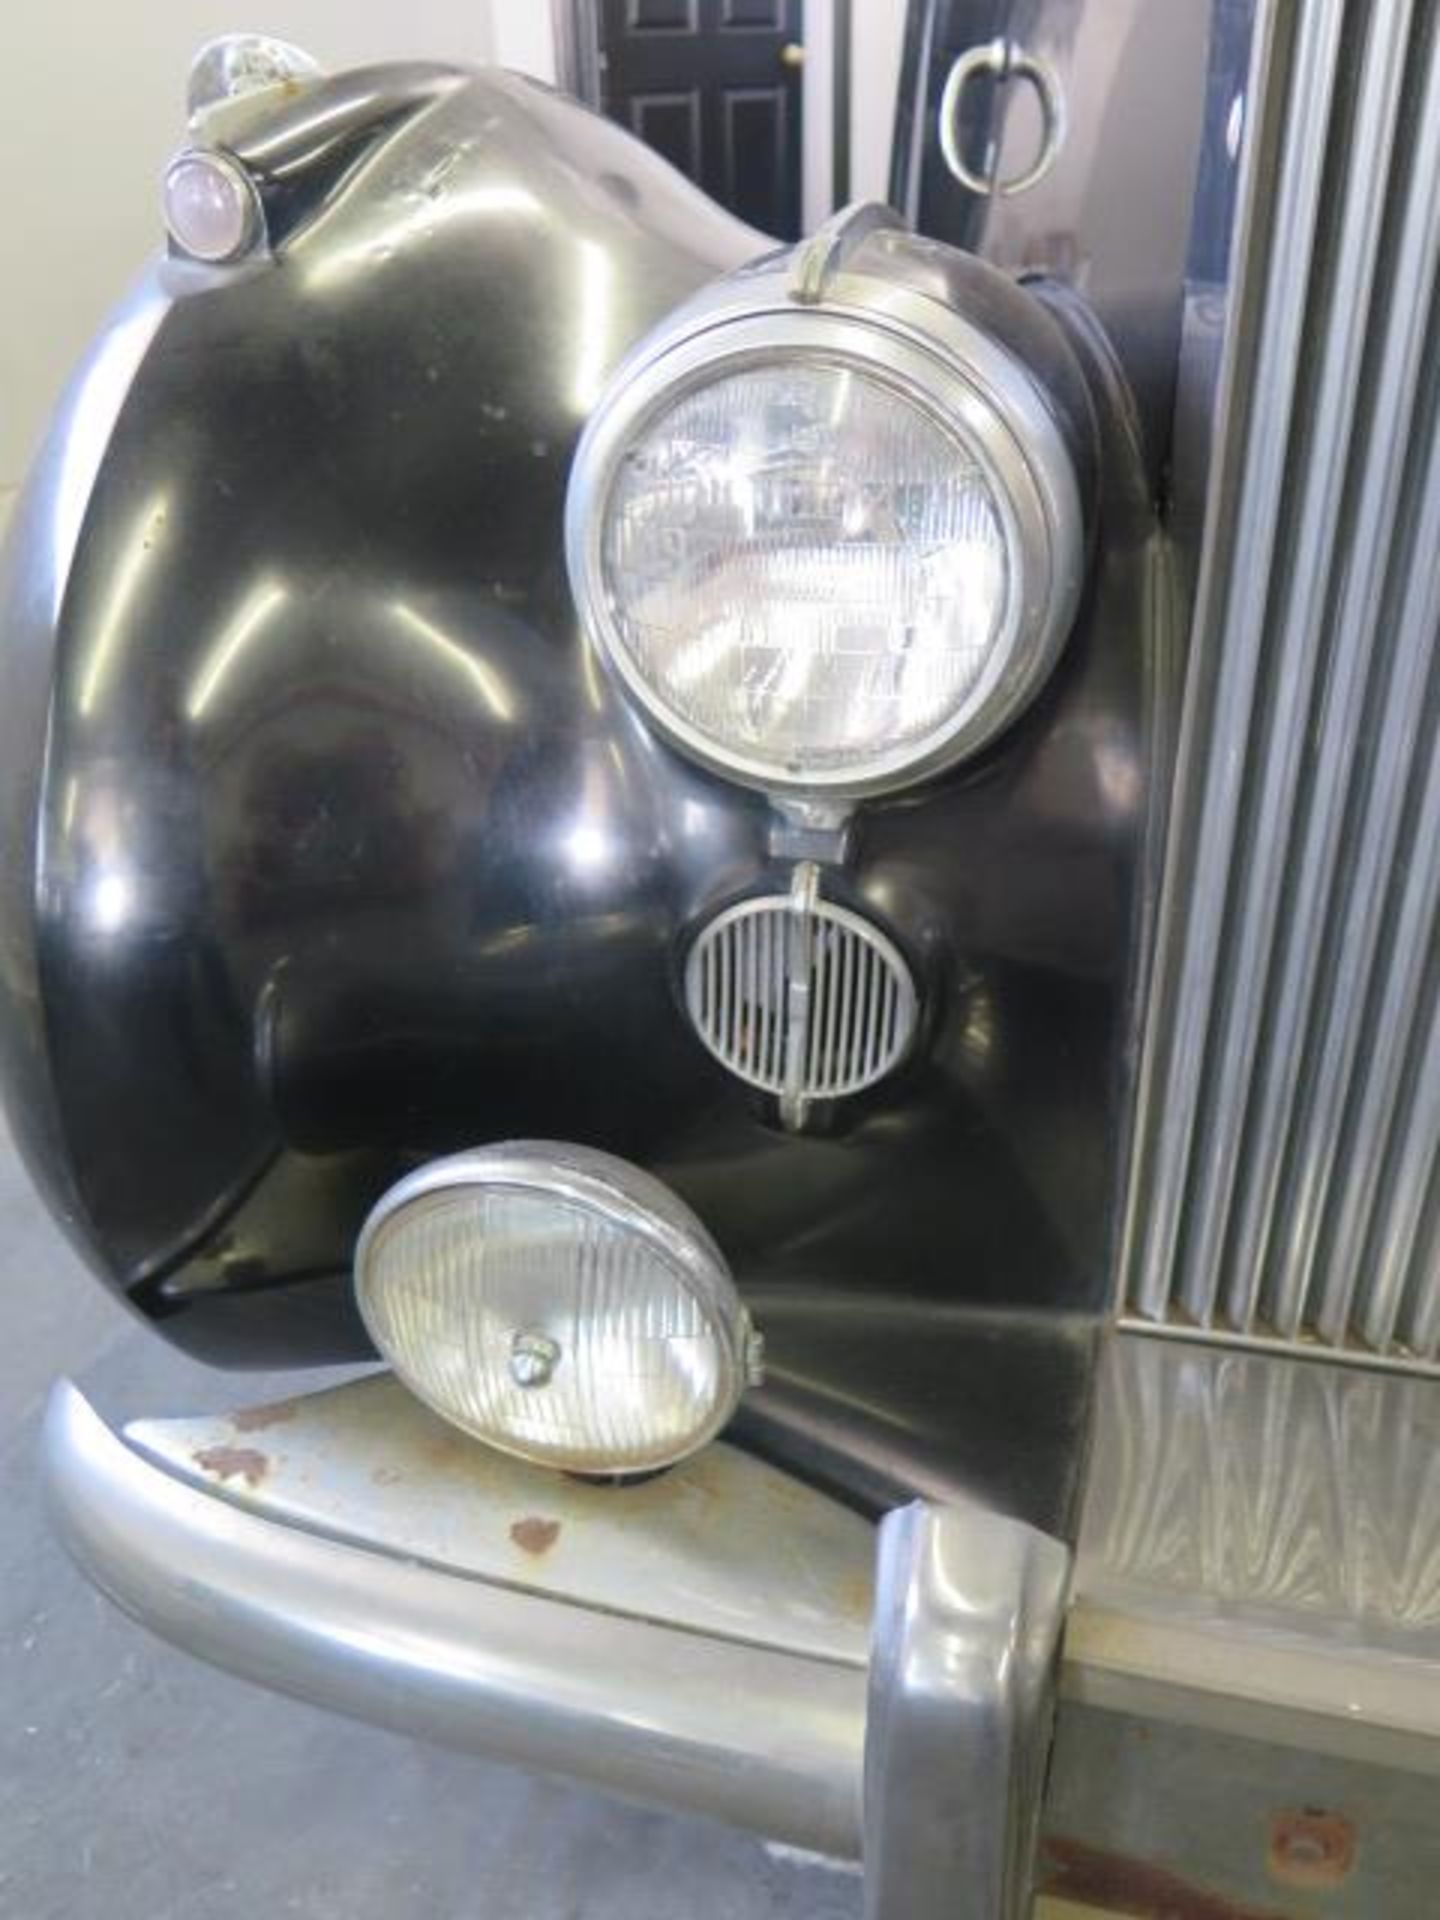 1952 Rolls Royce Silver Dawn Sedan Lics# 2DXP115 w/ Left Hand Steering, Gas, s/n S-78-C, SOLD AS IS - Image 6 of 38